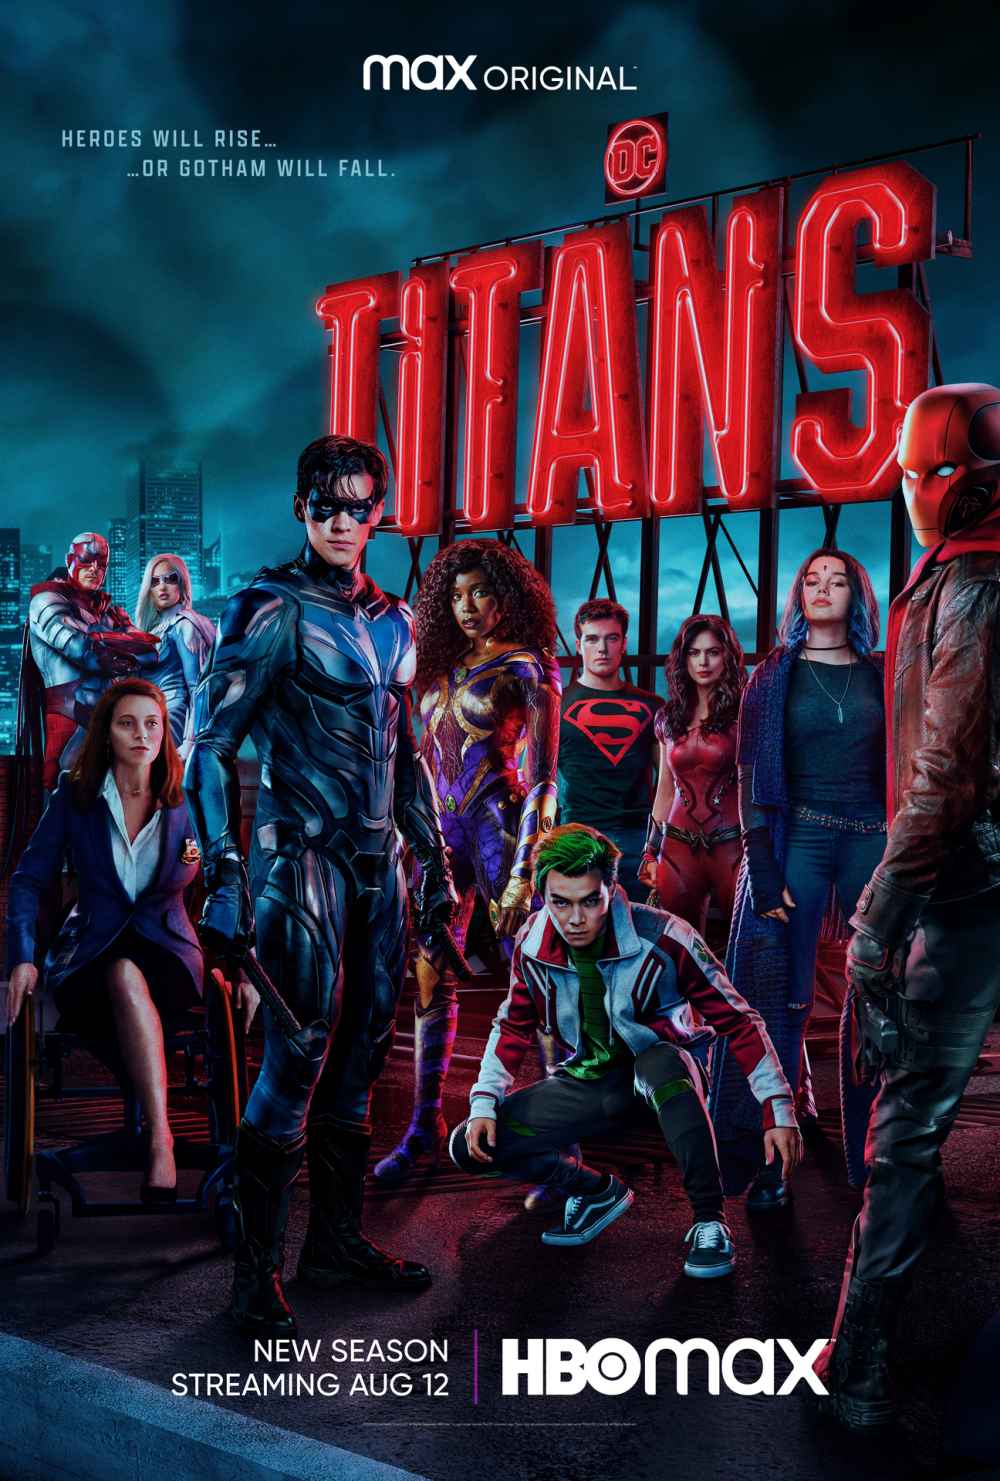 'Mad Men' Alum Vincent Kartheiser Denies Misconduct Allegations Over His Behavior on ‘Titans’ Set